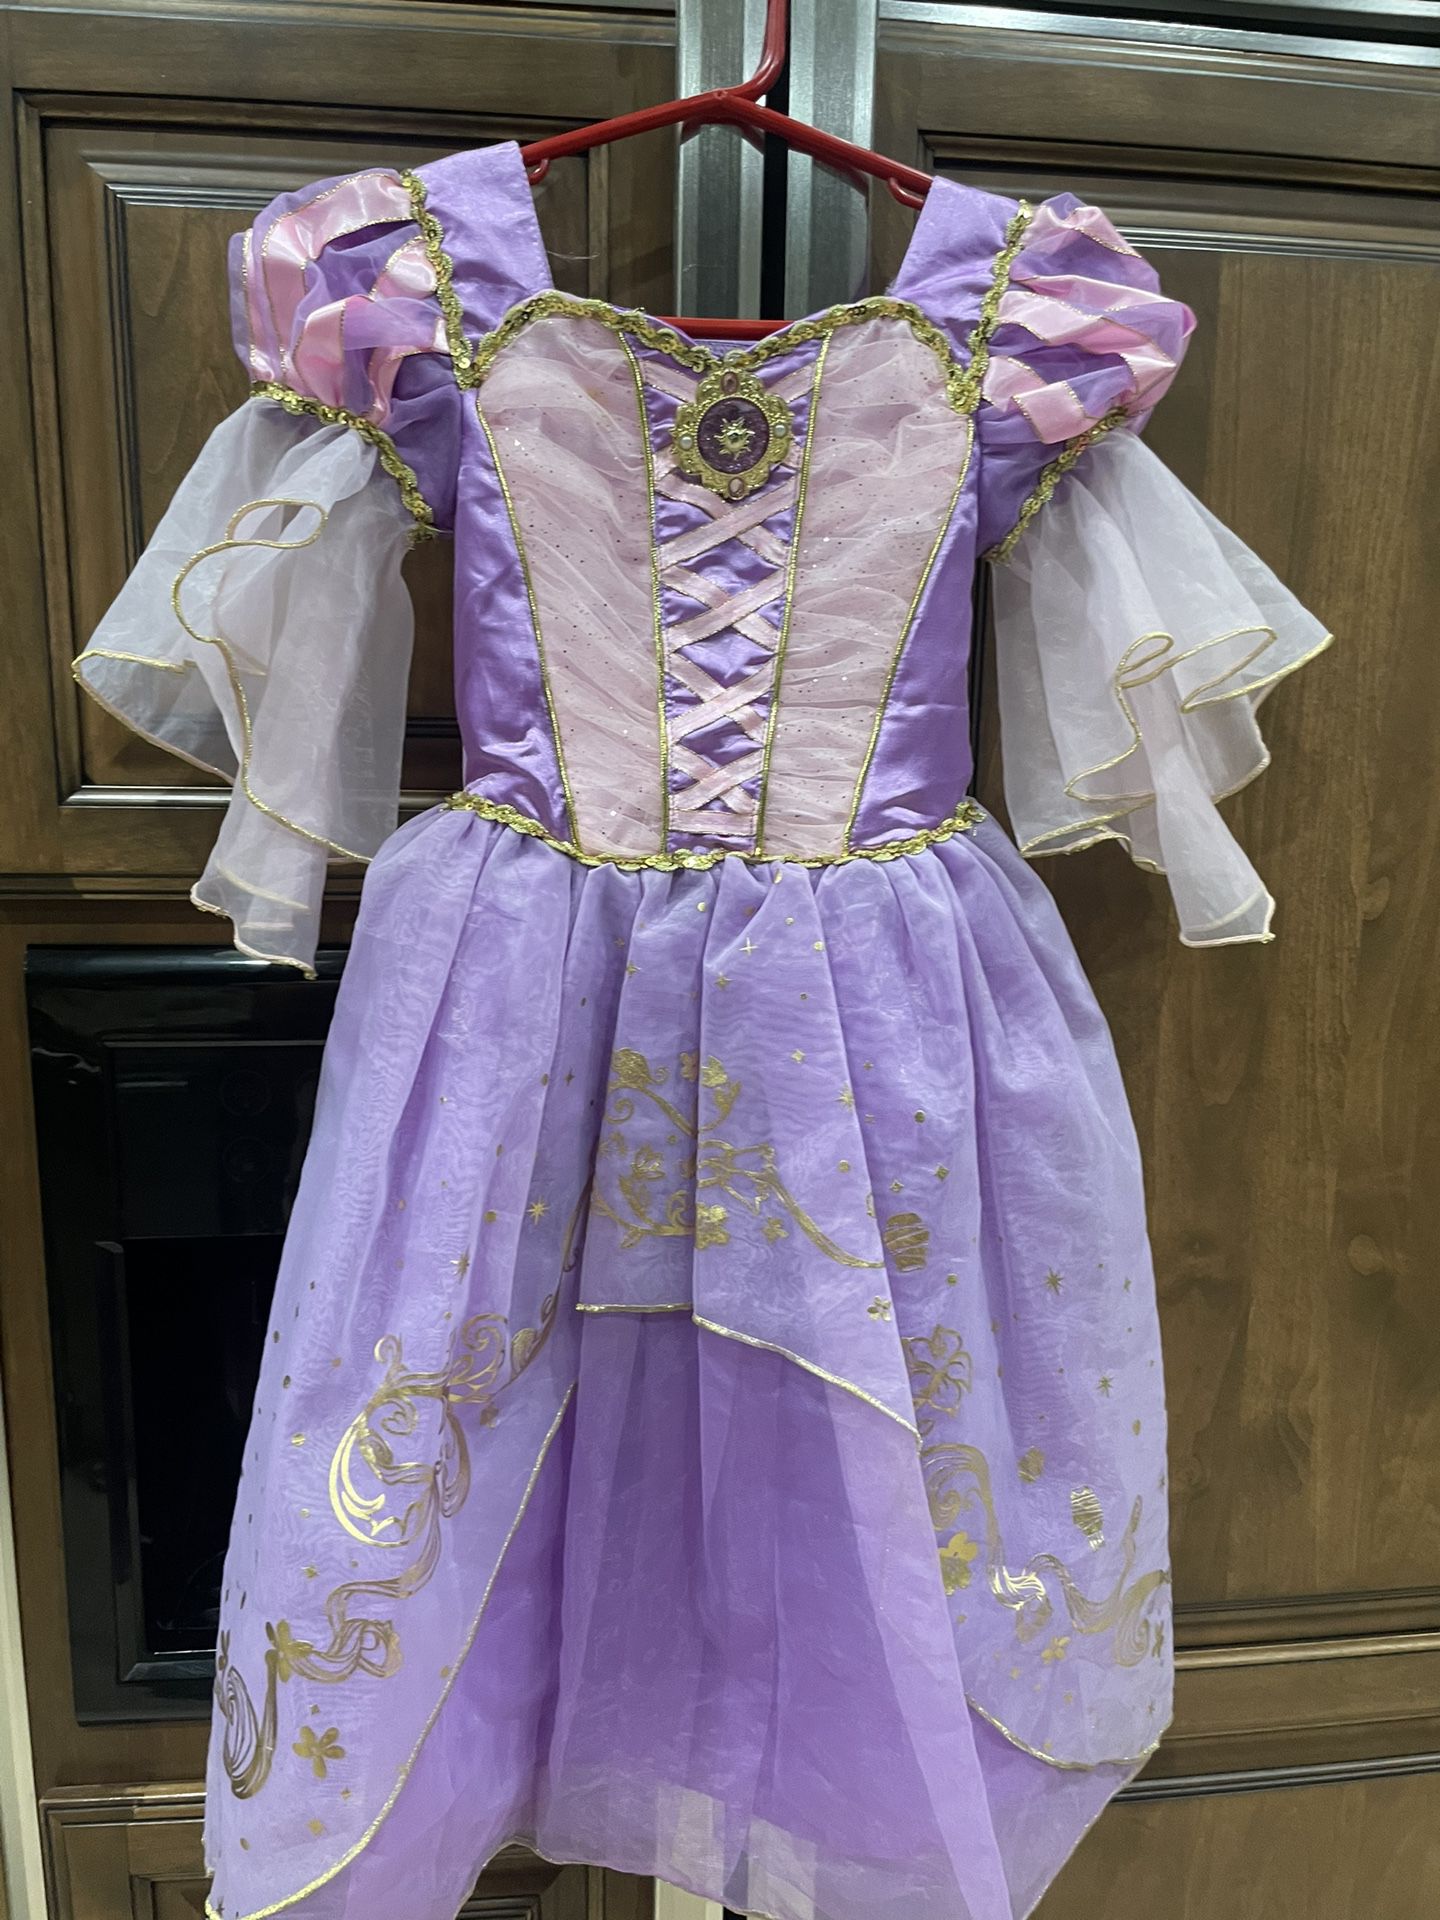 Princess Dresses/Costumes Size 4